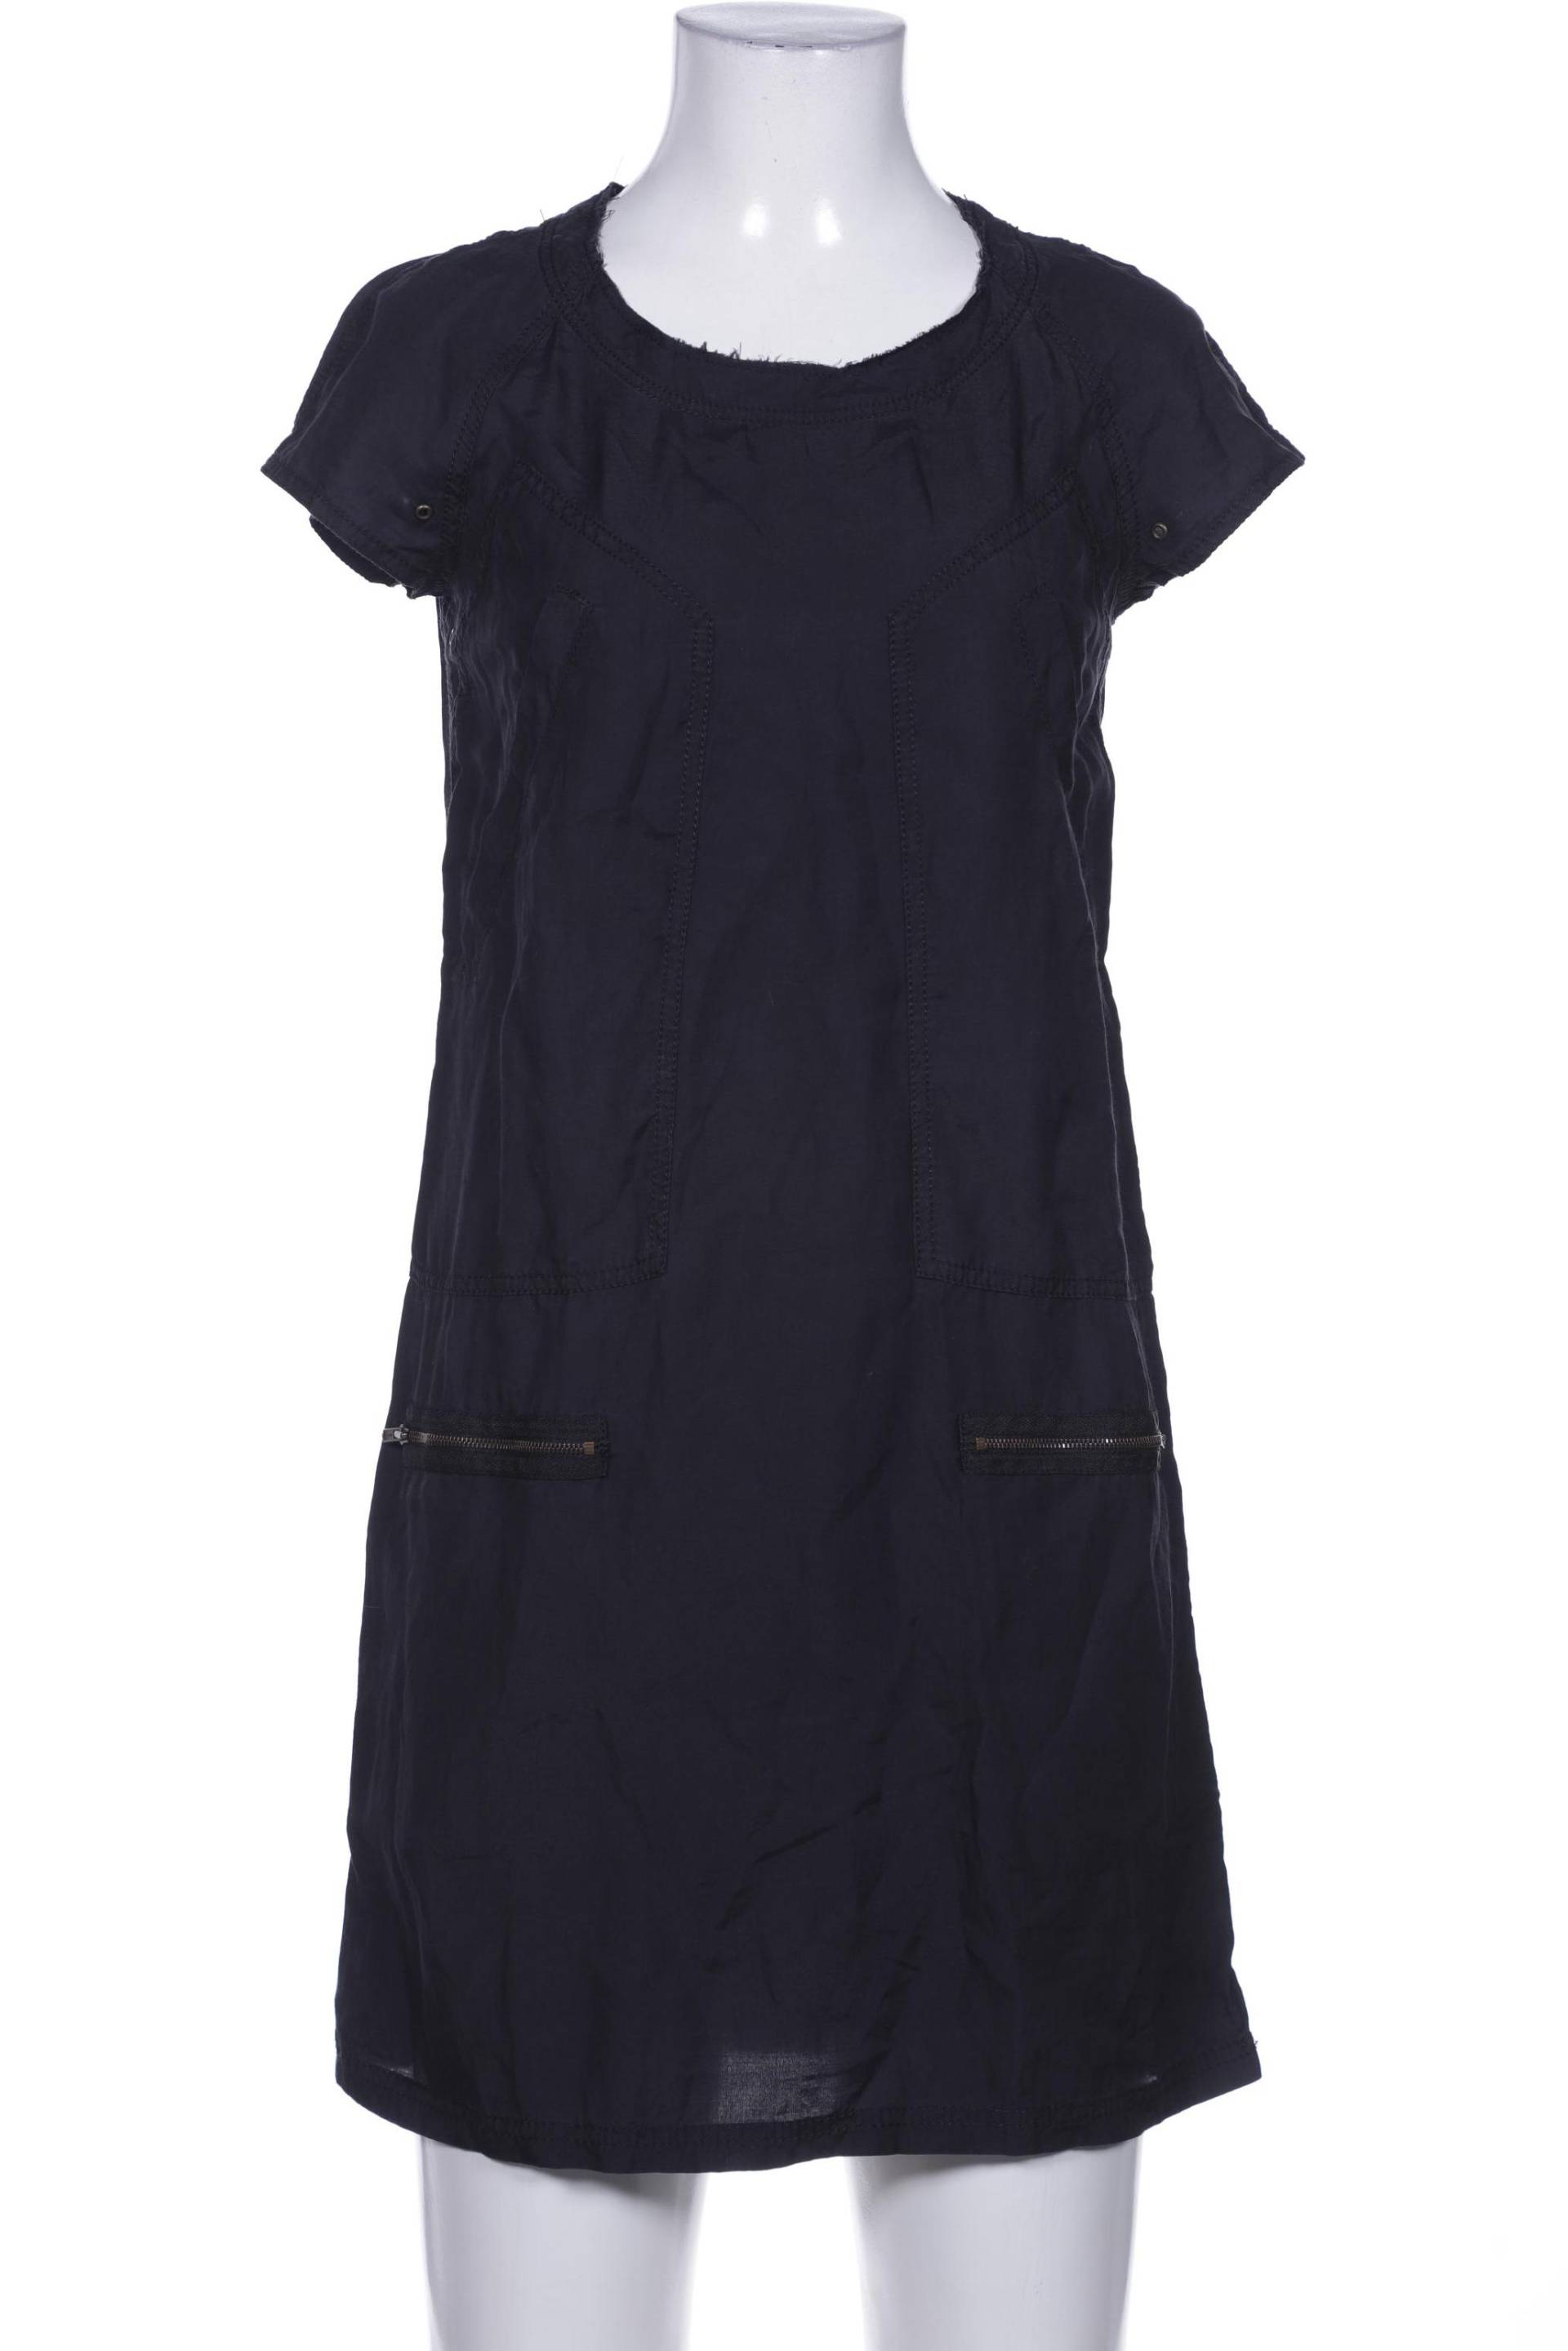 Isabel Marant Etoile Damen Kleid, schwarz, Gr. 32 von Isabel Marant Etoile